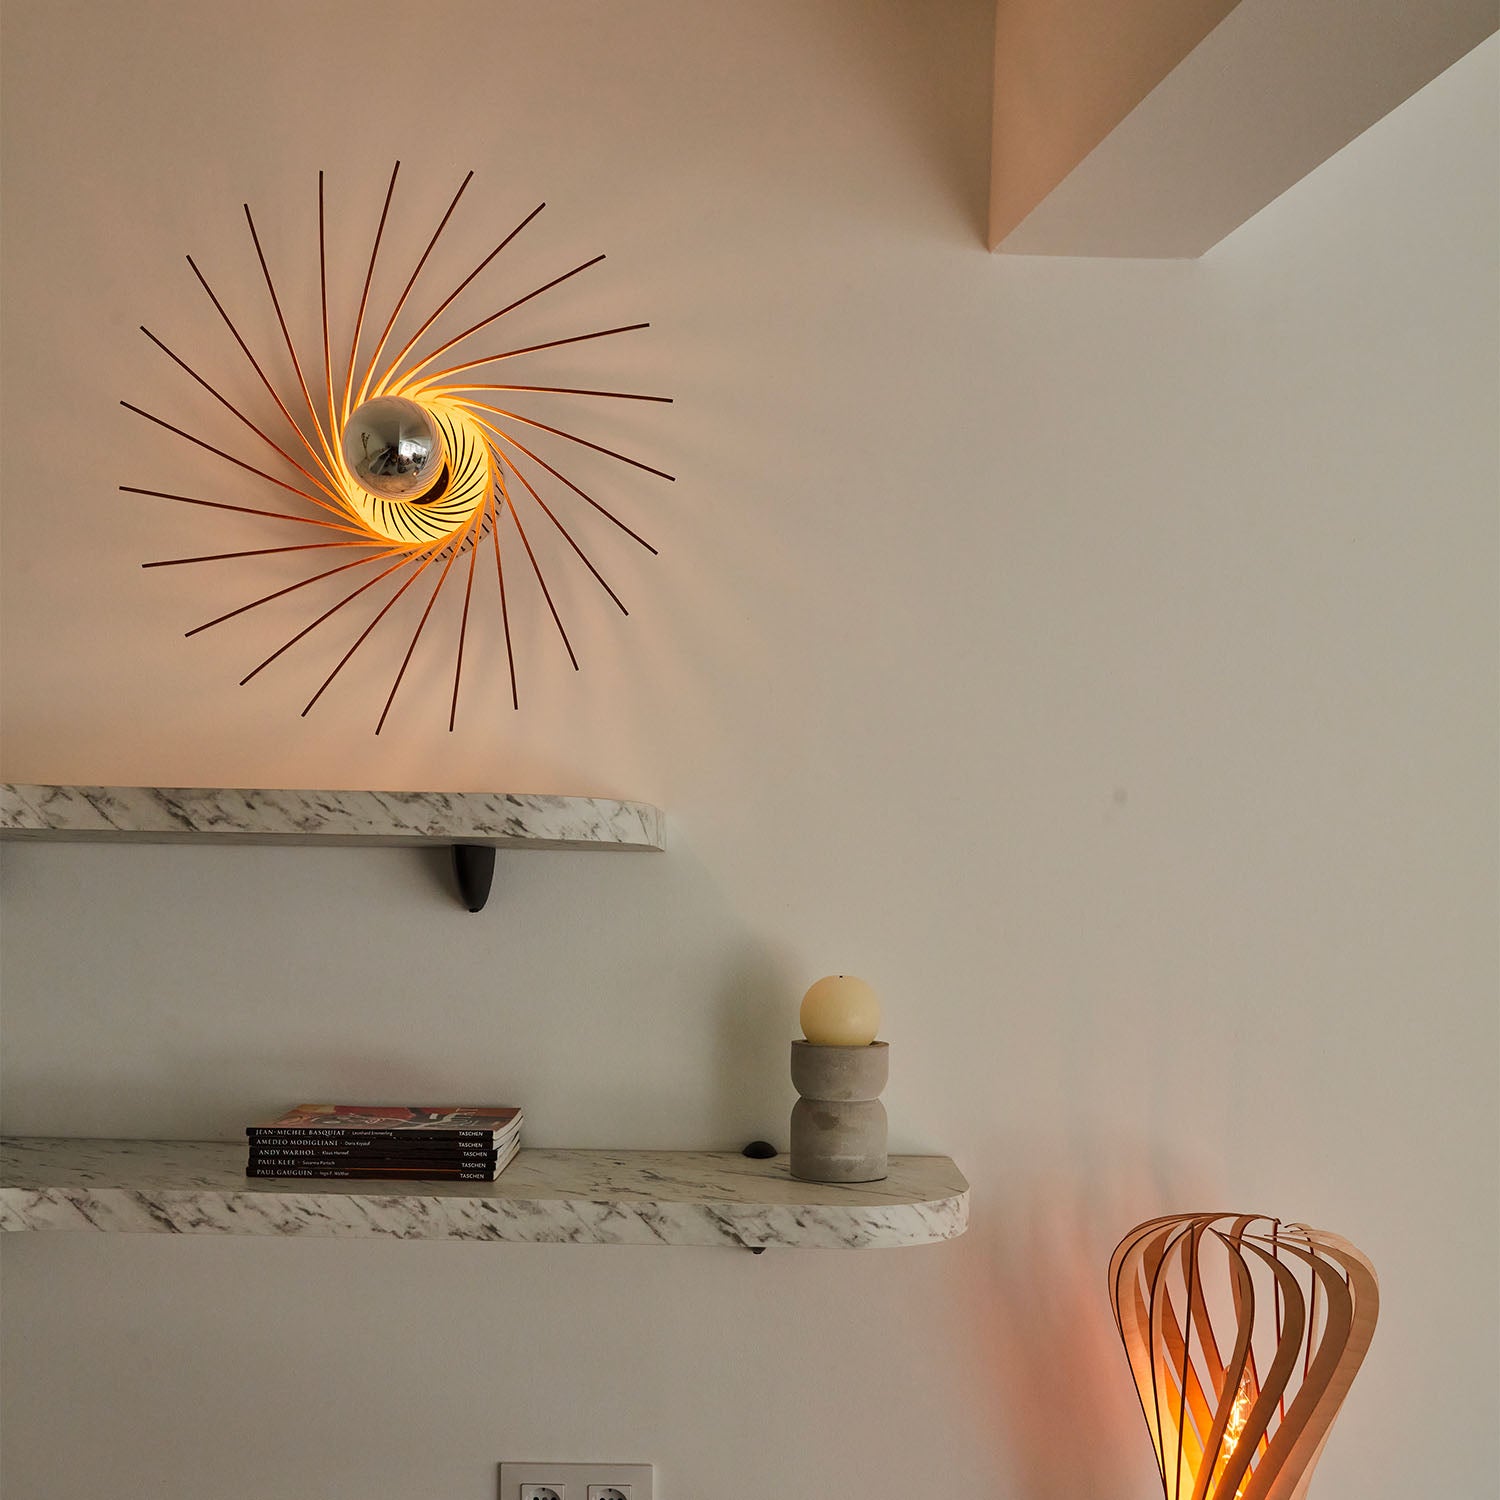 SANPEDRO - Handmade natural wood spiral wall light